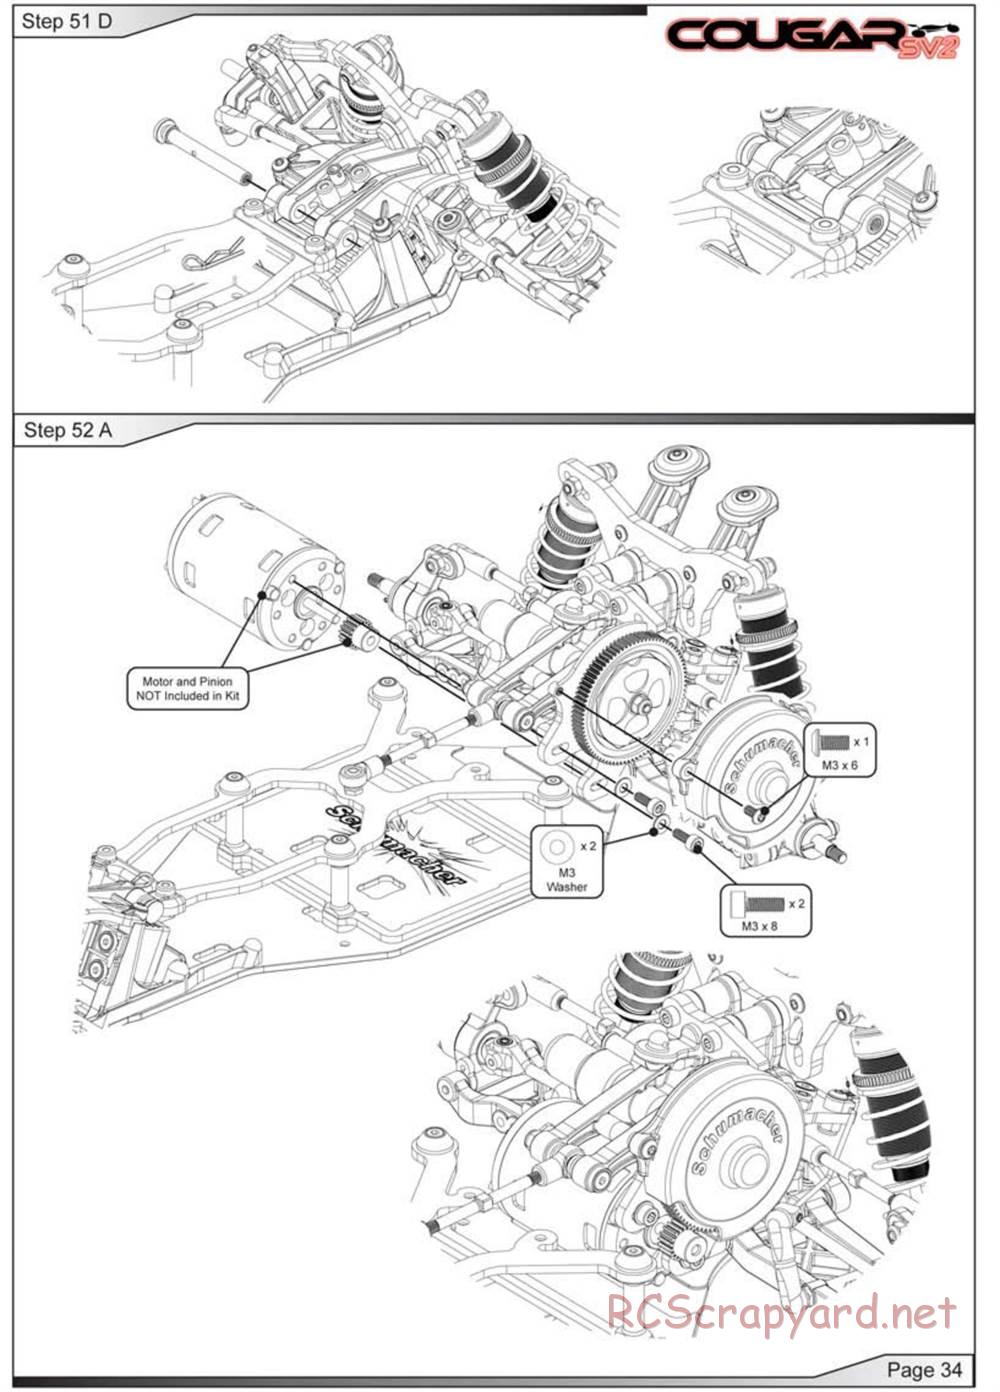 Schumacher - Cougar SV2 - Manual - Page 35